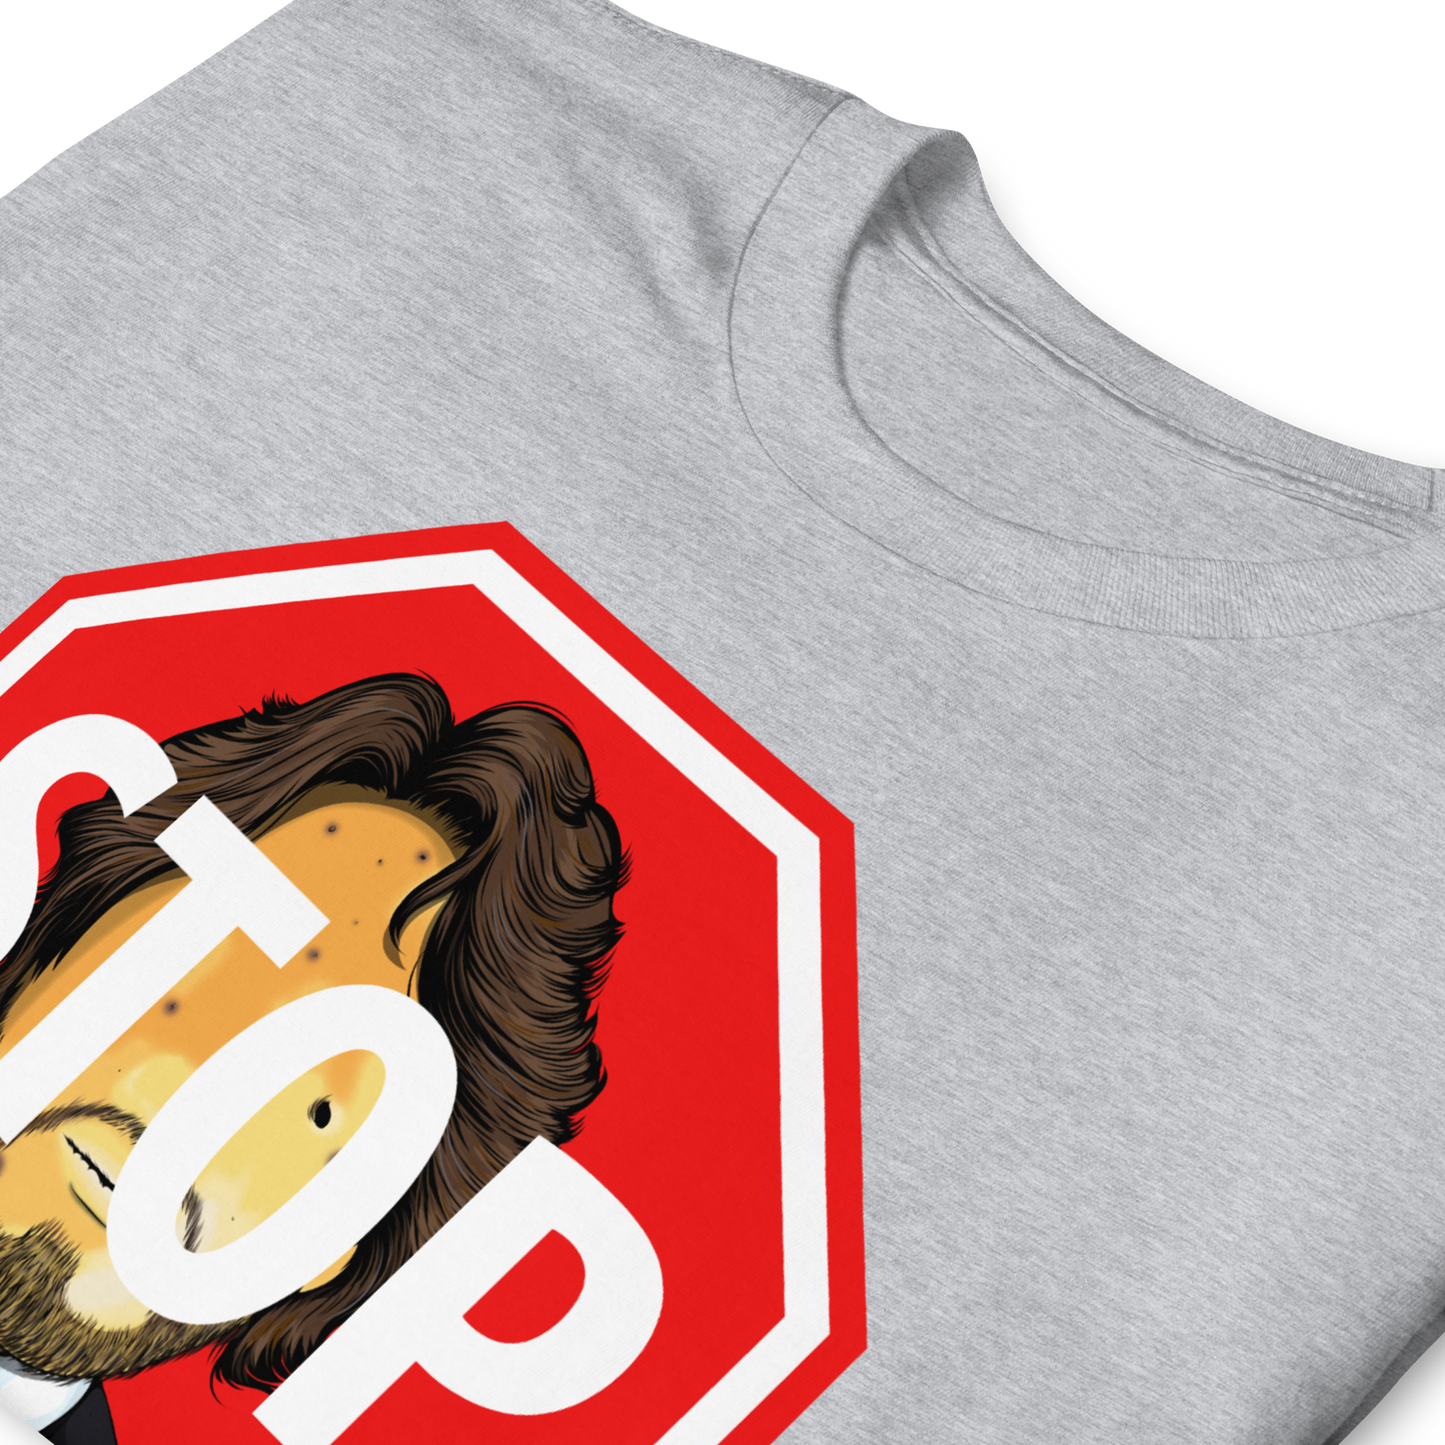 Little Potato Stop Sign - Unisex Basic Softstyle T-Shirt - Gildan 64000